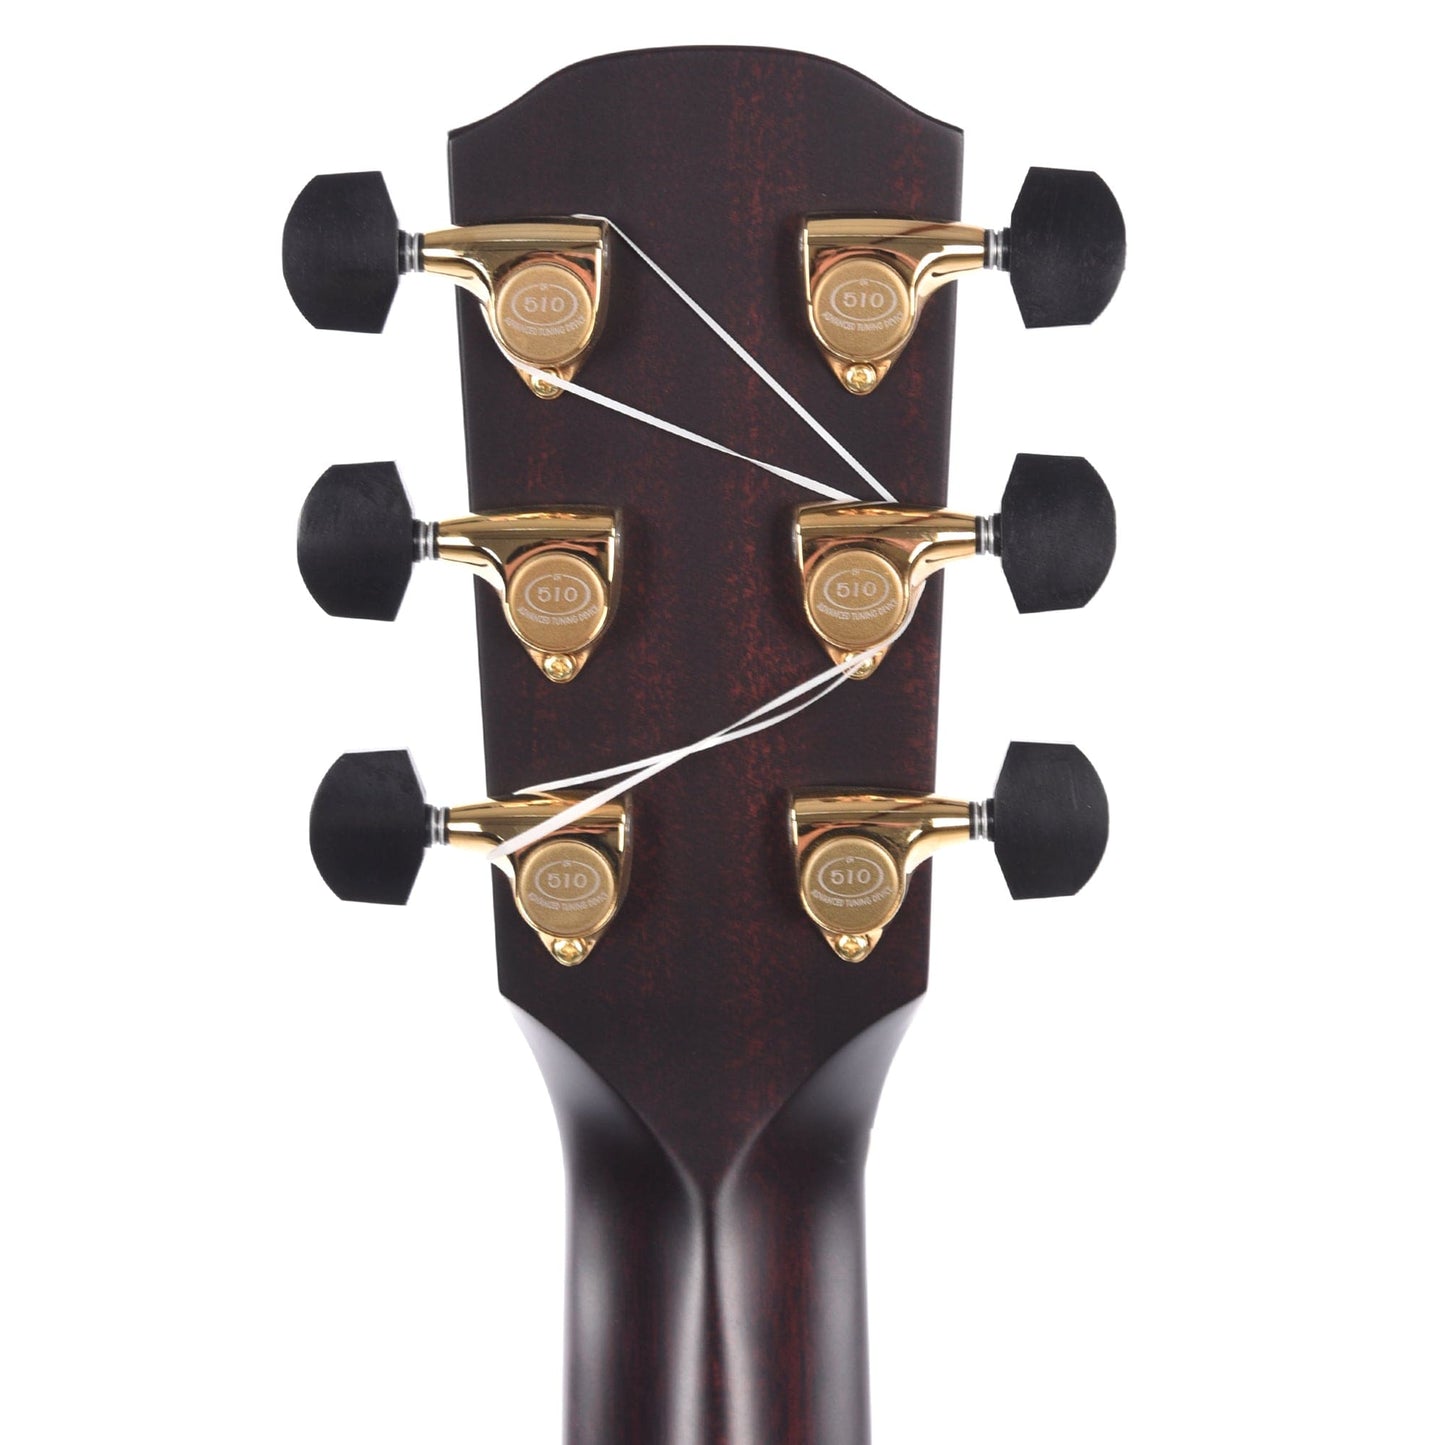 Alvarez DYM60HD Yairi Masterworks Honduran Acoustic Guitar Natural Gloss